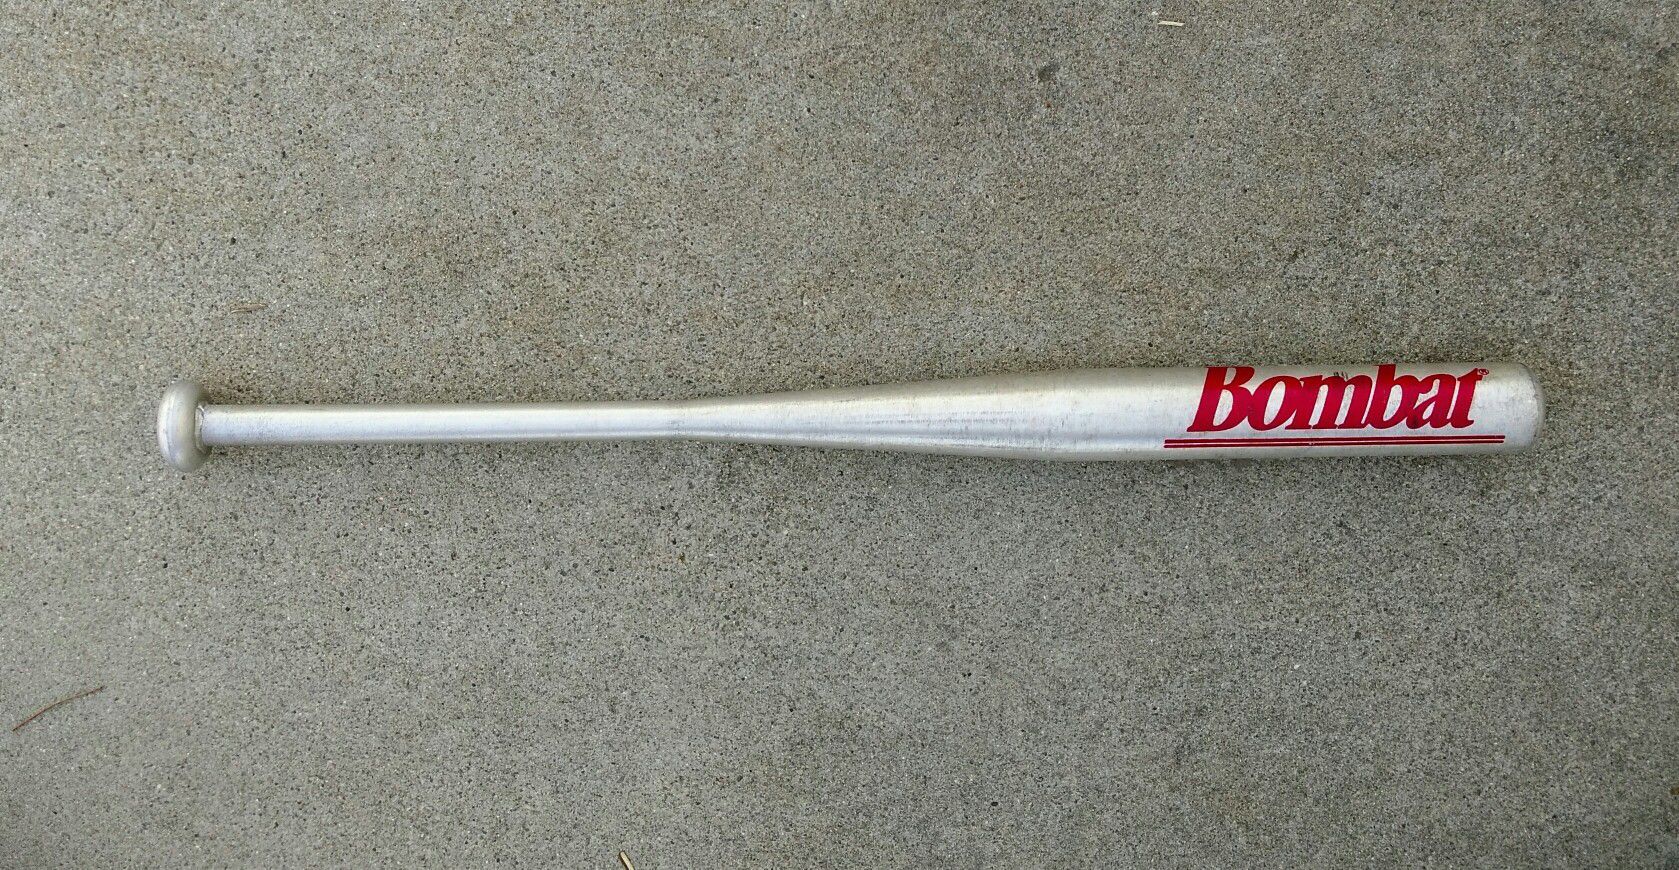 Bombat #9 little league baseball softball aluminum bat